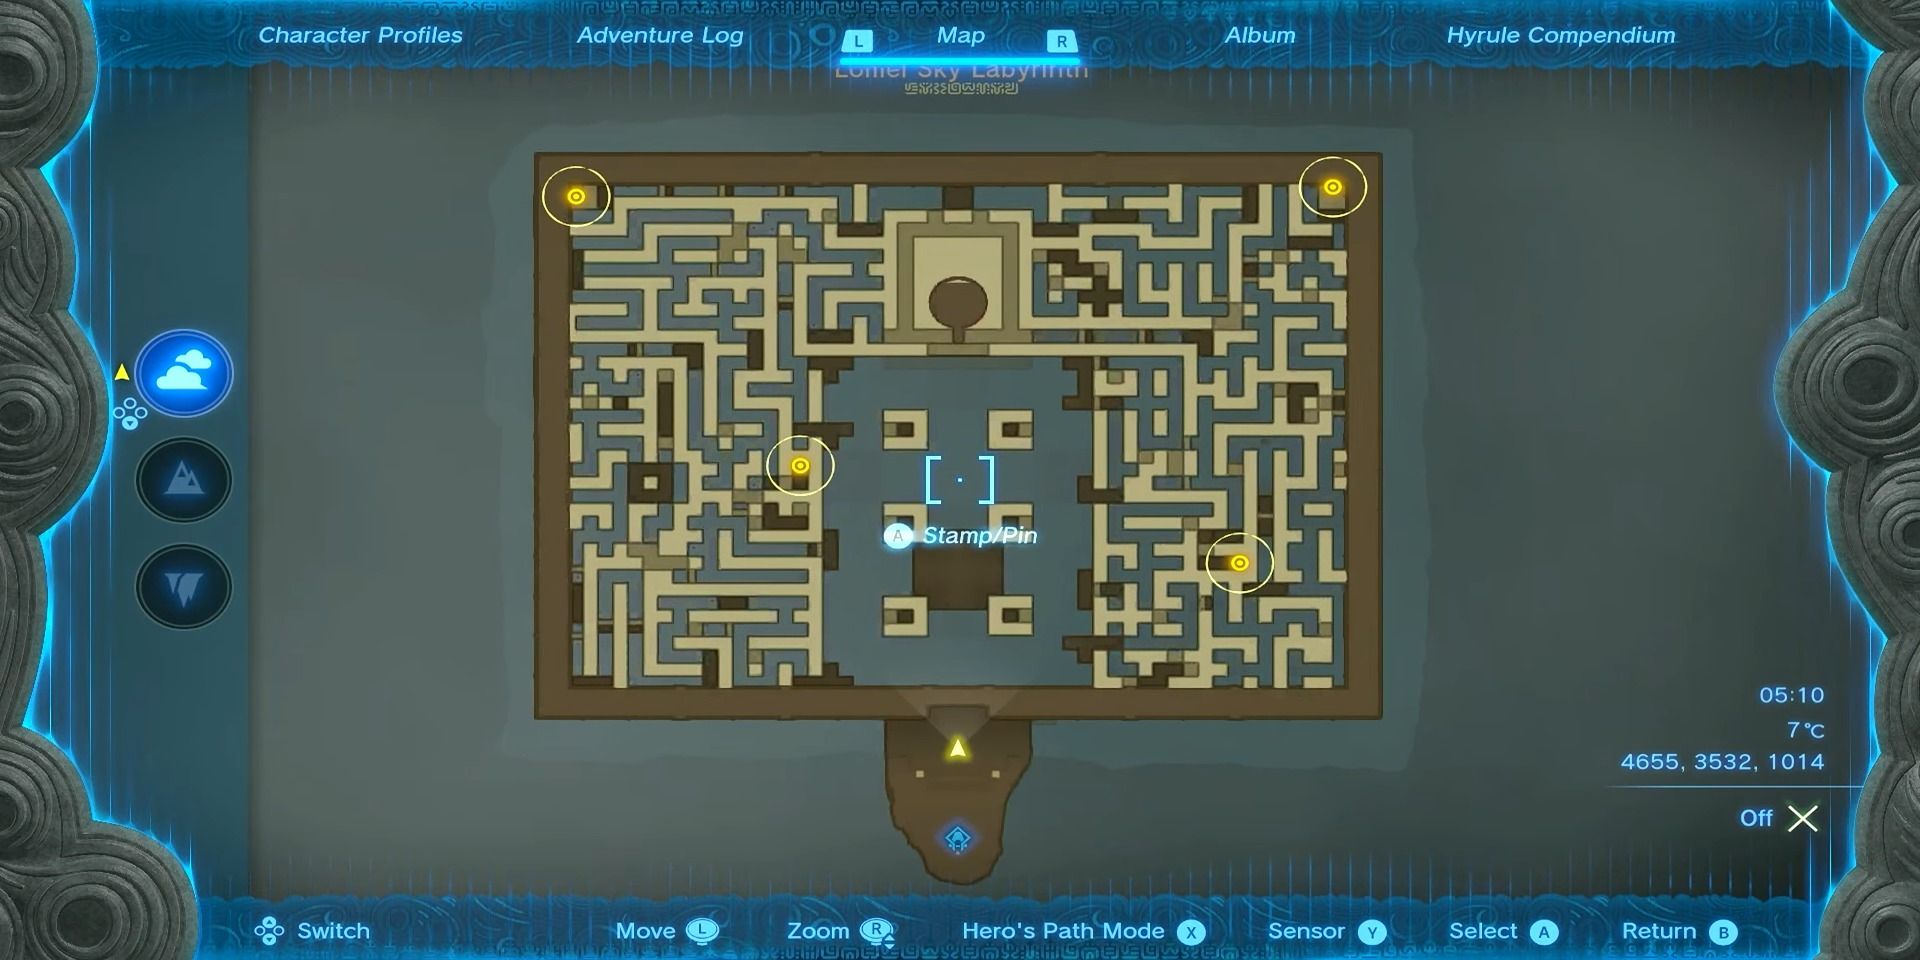 Map of Lumi Sky Labyrinth in Zelda: Kingdom's Tears